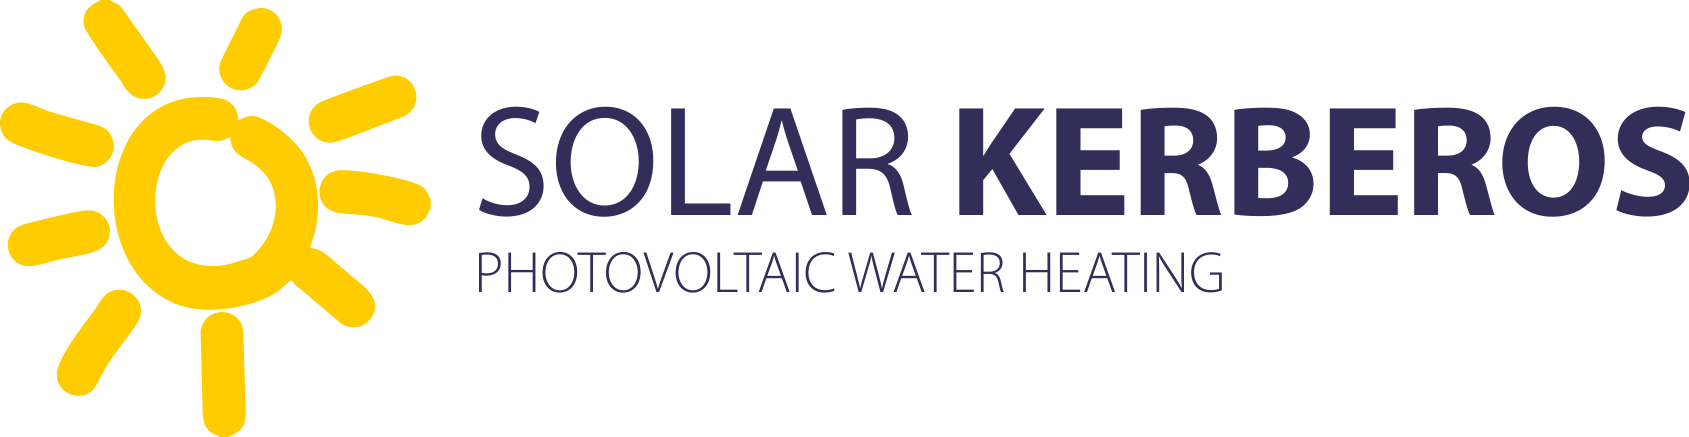 SOLAR KERBEROS - solární ohřev vody